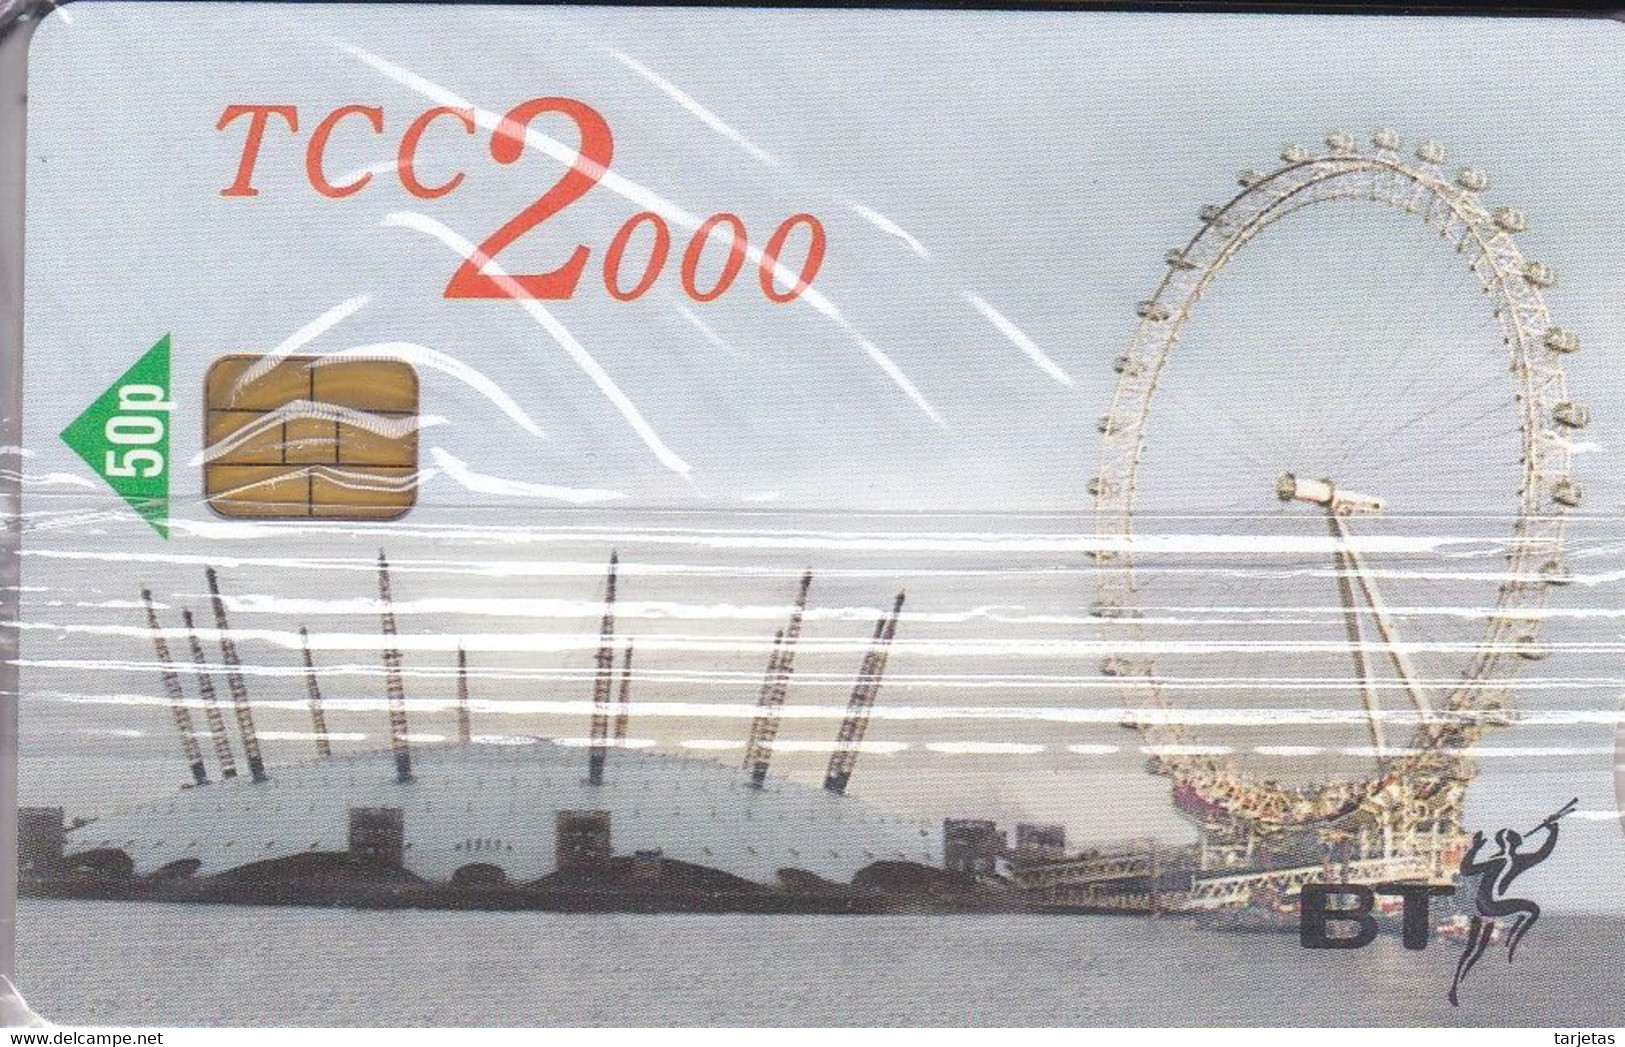 TARJETA DEL REINO UNIDO DE BT TCC 2000 (NUEVA-MINT) NORIA DE LONDRES - BT Promociónales